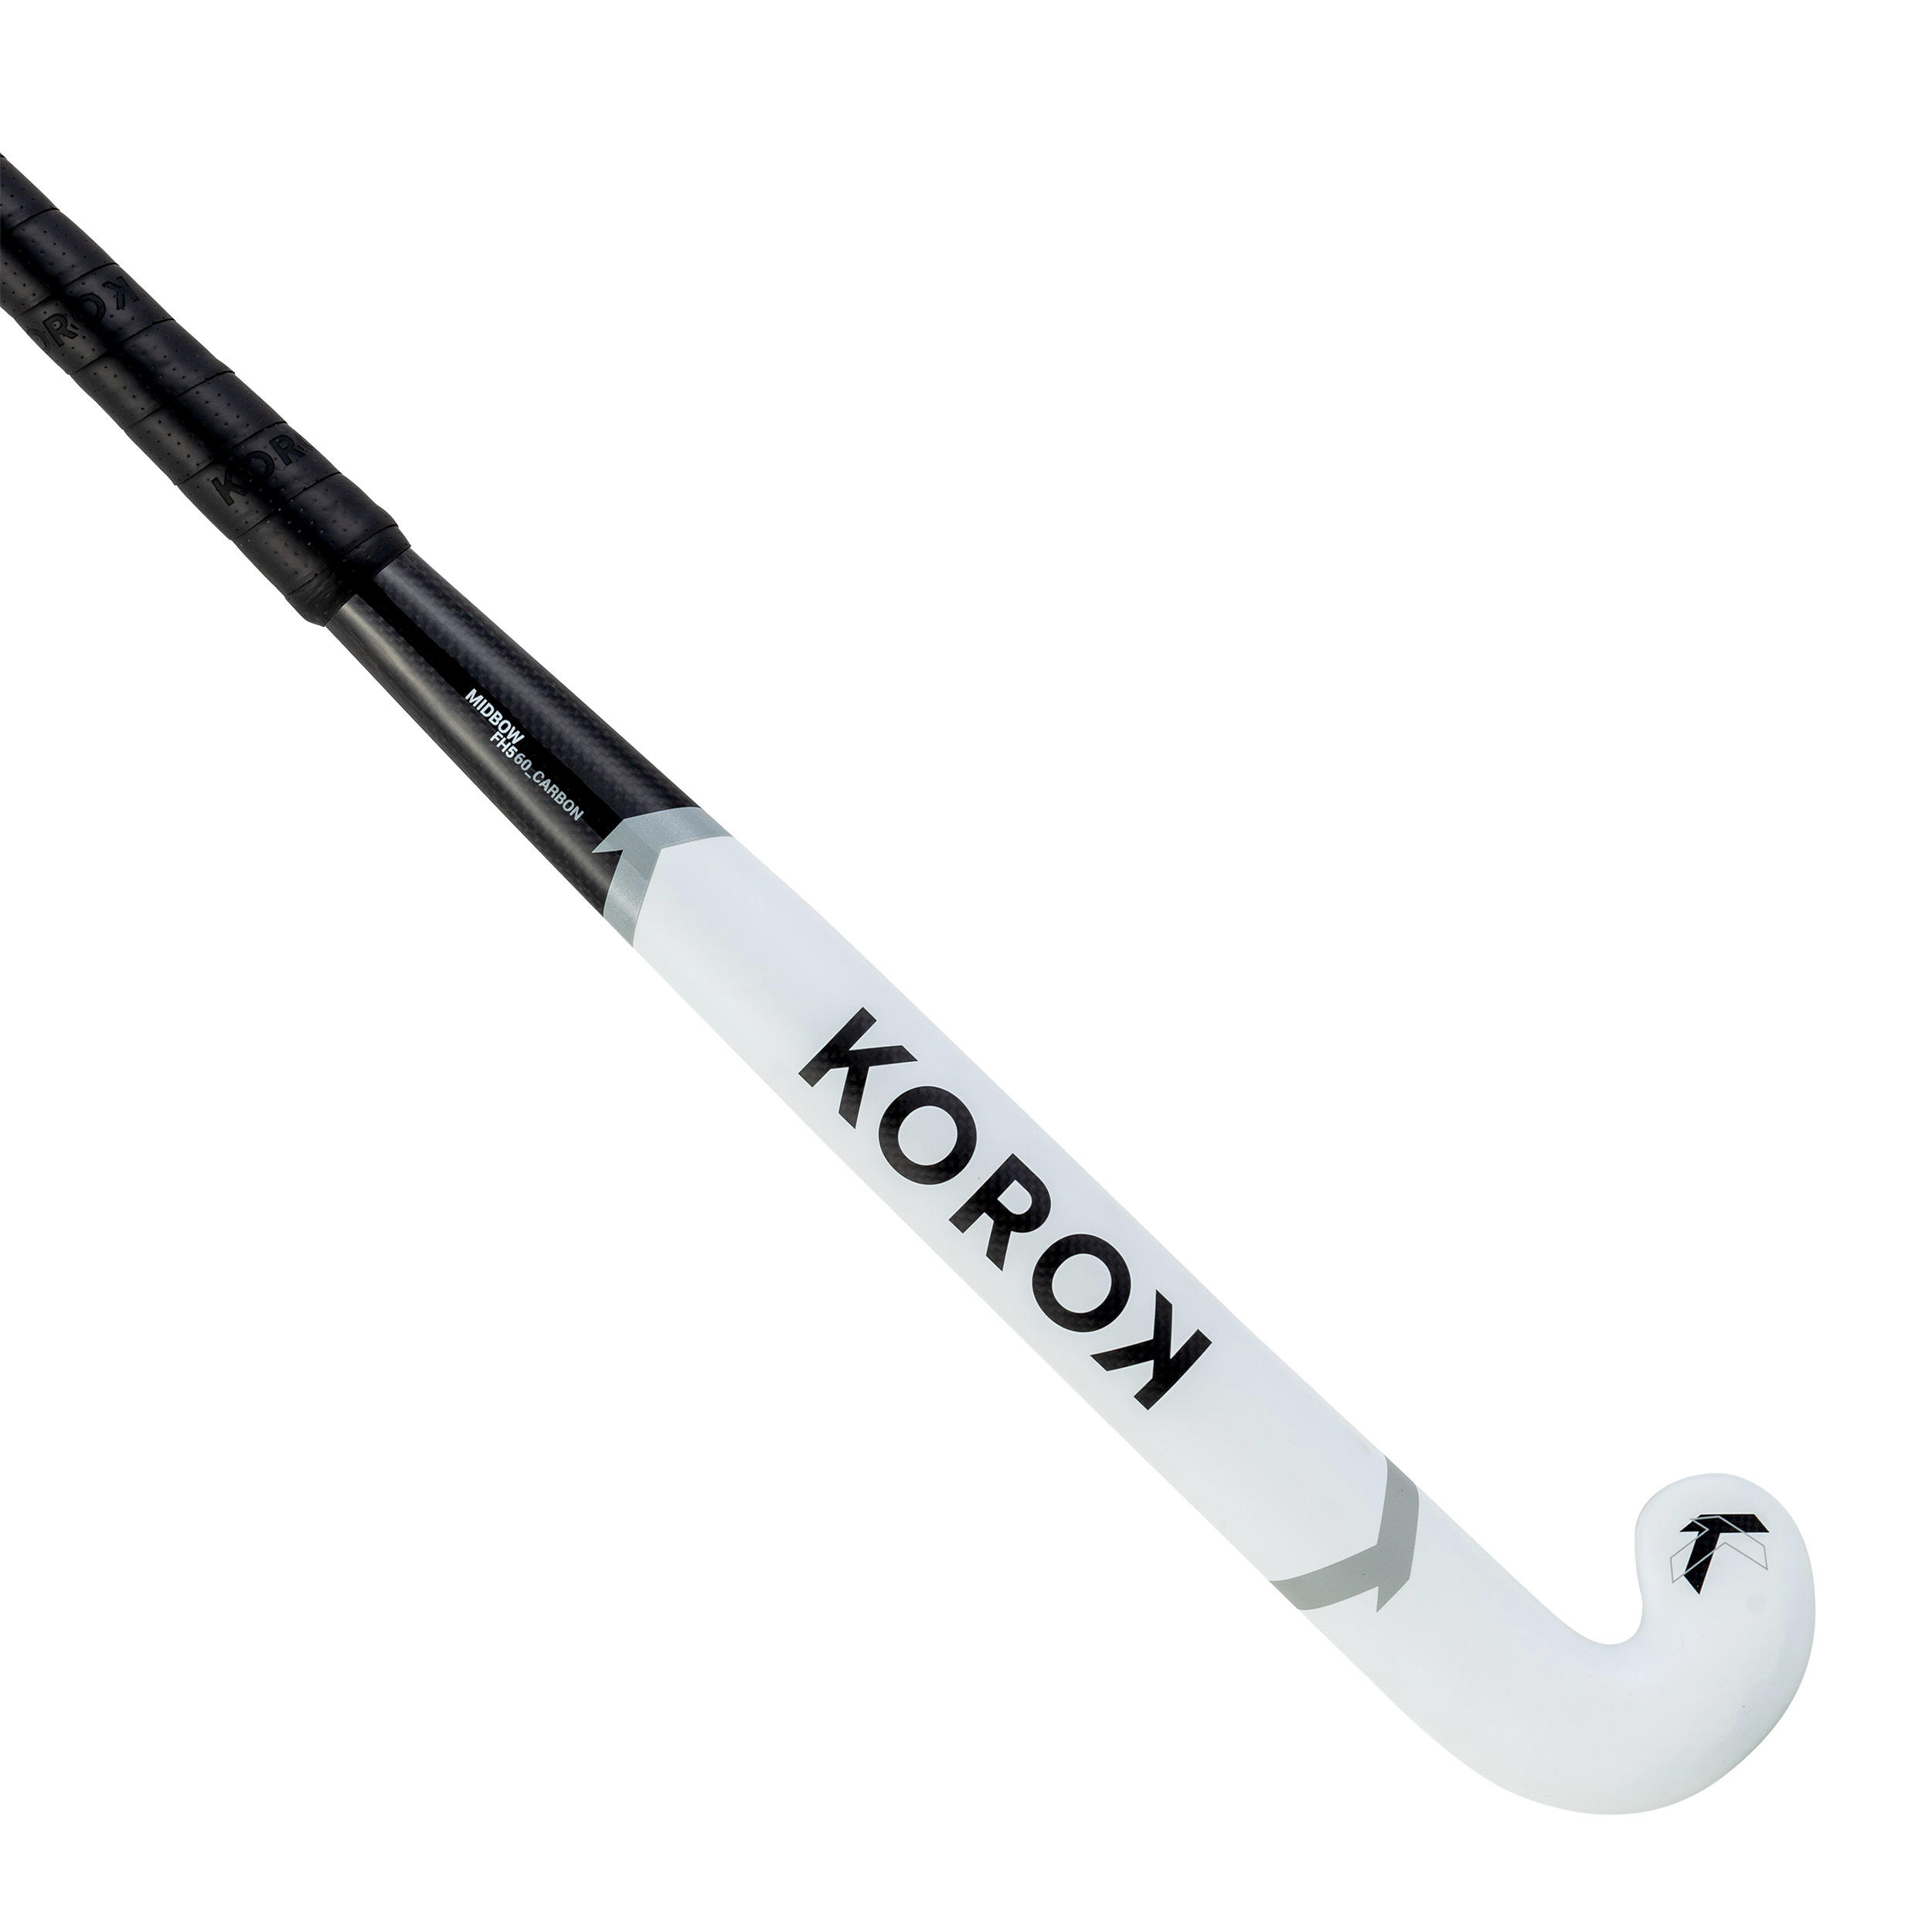 KOROK Adult Intermediate 60% Carbon Mid Bow Field Hockey Stick FH560 - White/Grey